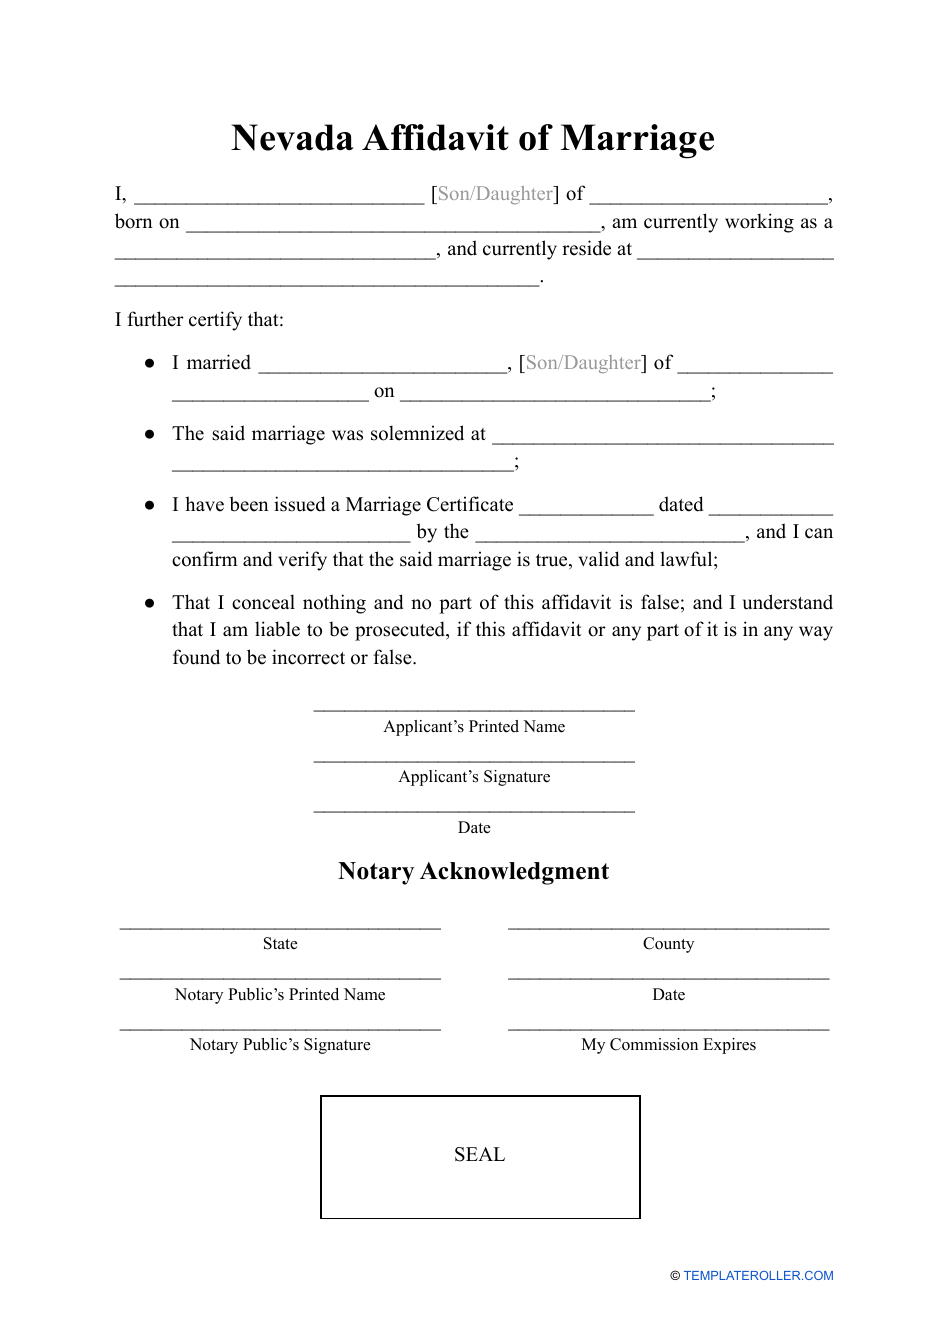 Affidavit of Marriage - Nevada, Page 1